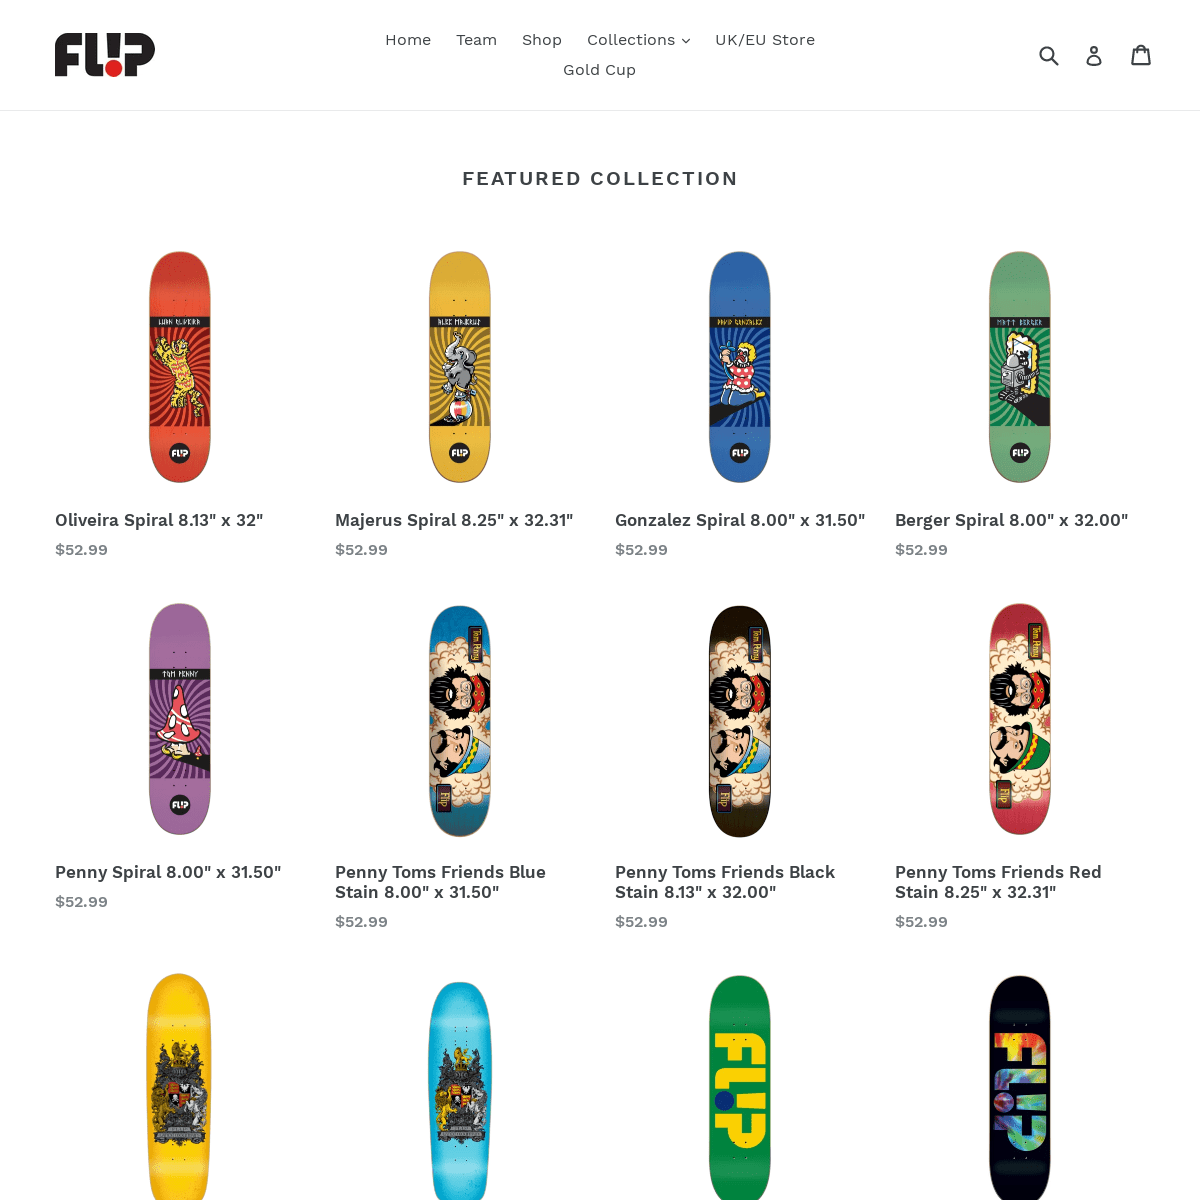 A complete backup of flipskateboards.com